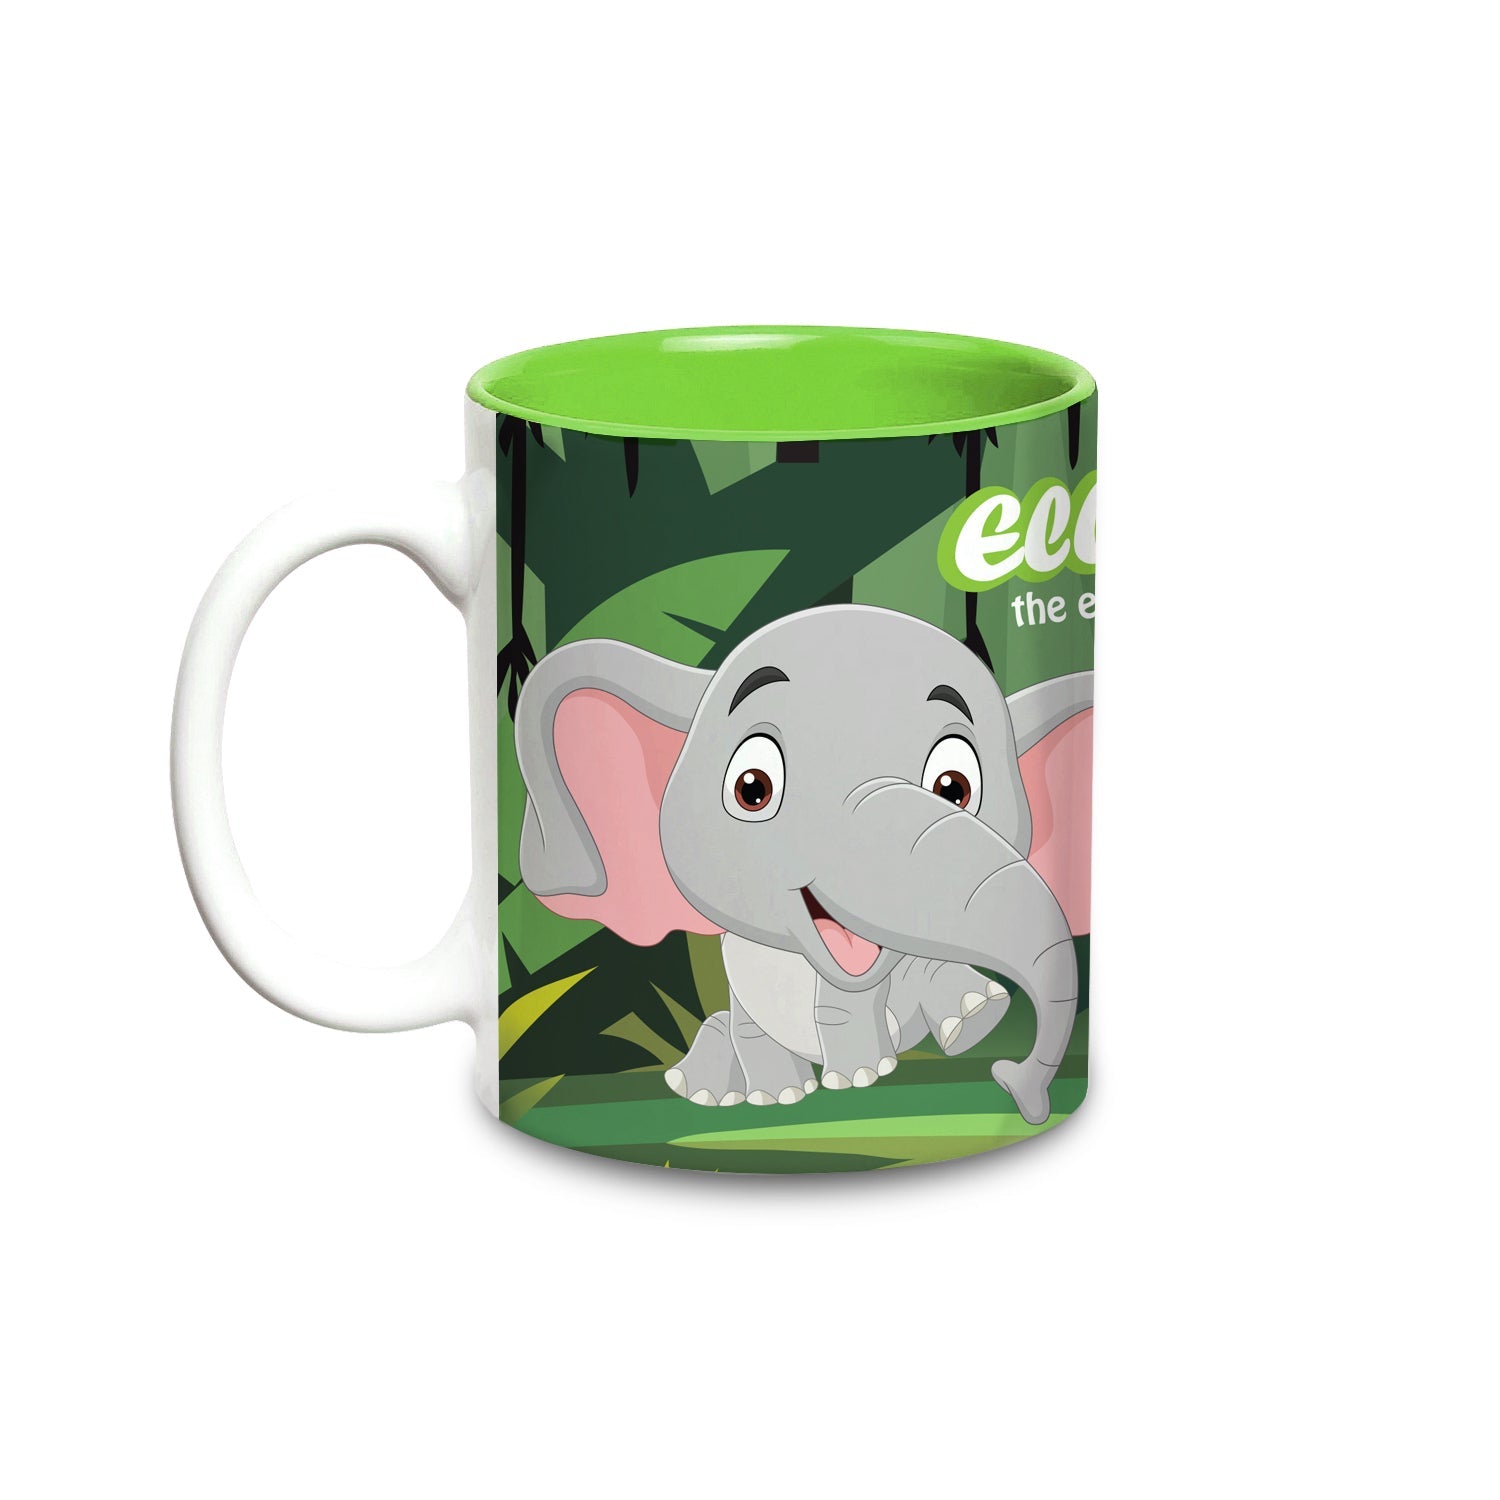 Wild Focus Kids -Ellie the Elephant Mug, 1pc